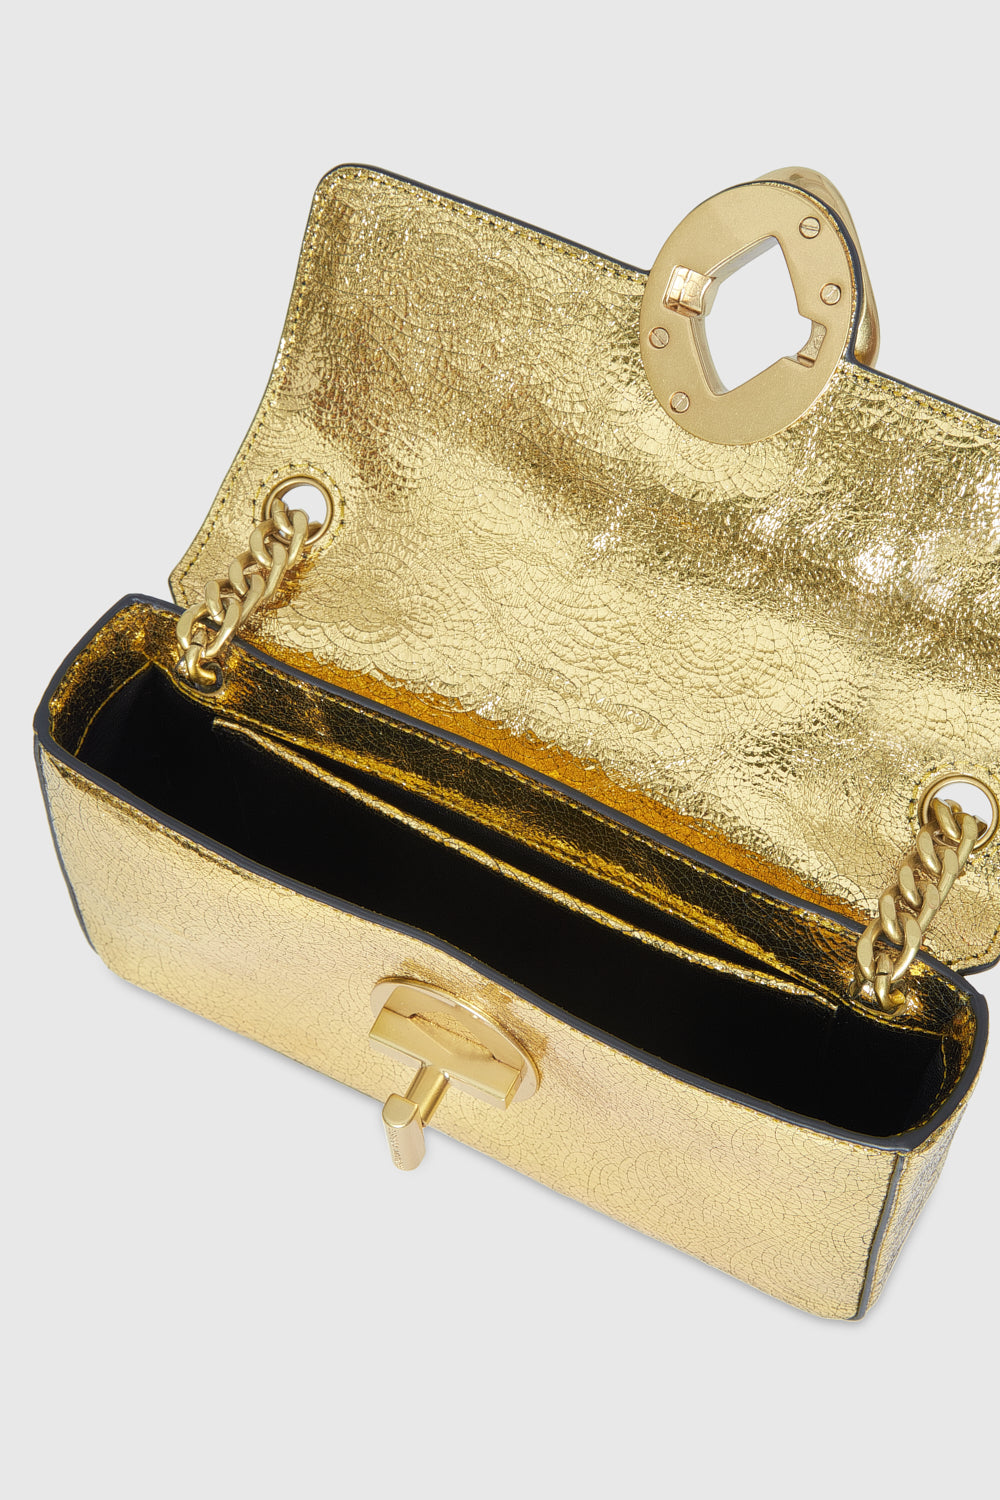 The G Small Shoulder Bag w/ Chain Strap - Gold - Rebecca Minkoff